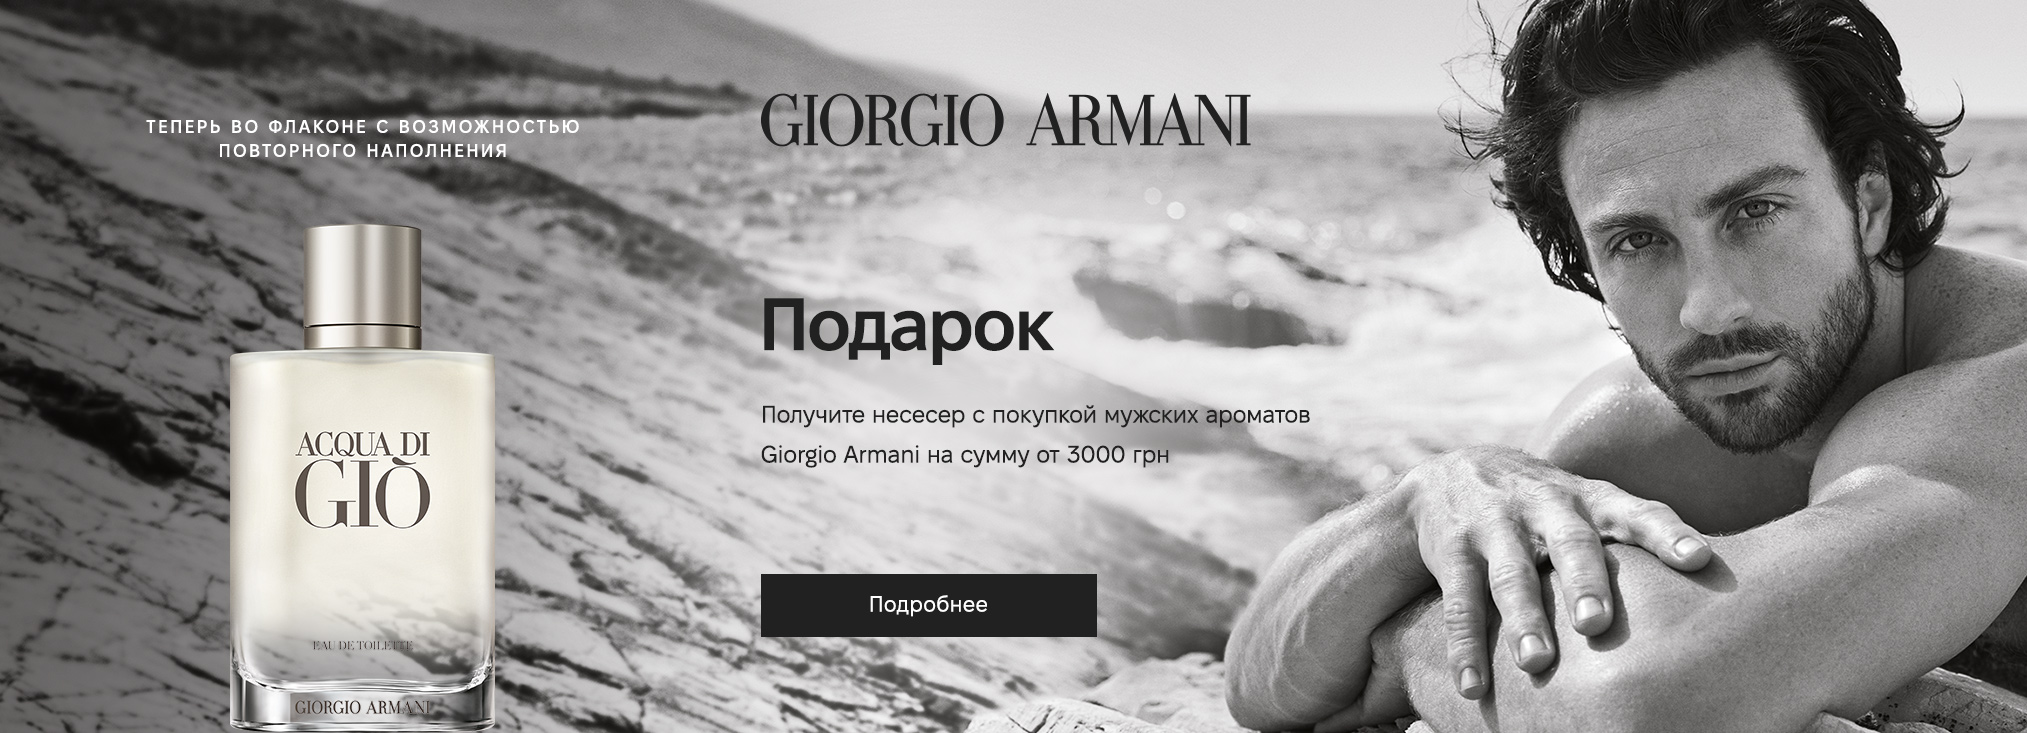 Giorgio Armani_3